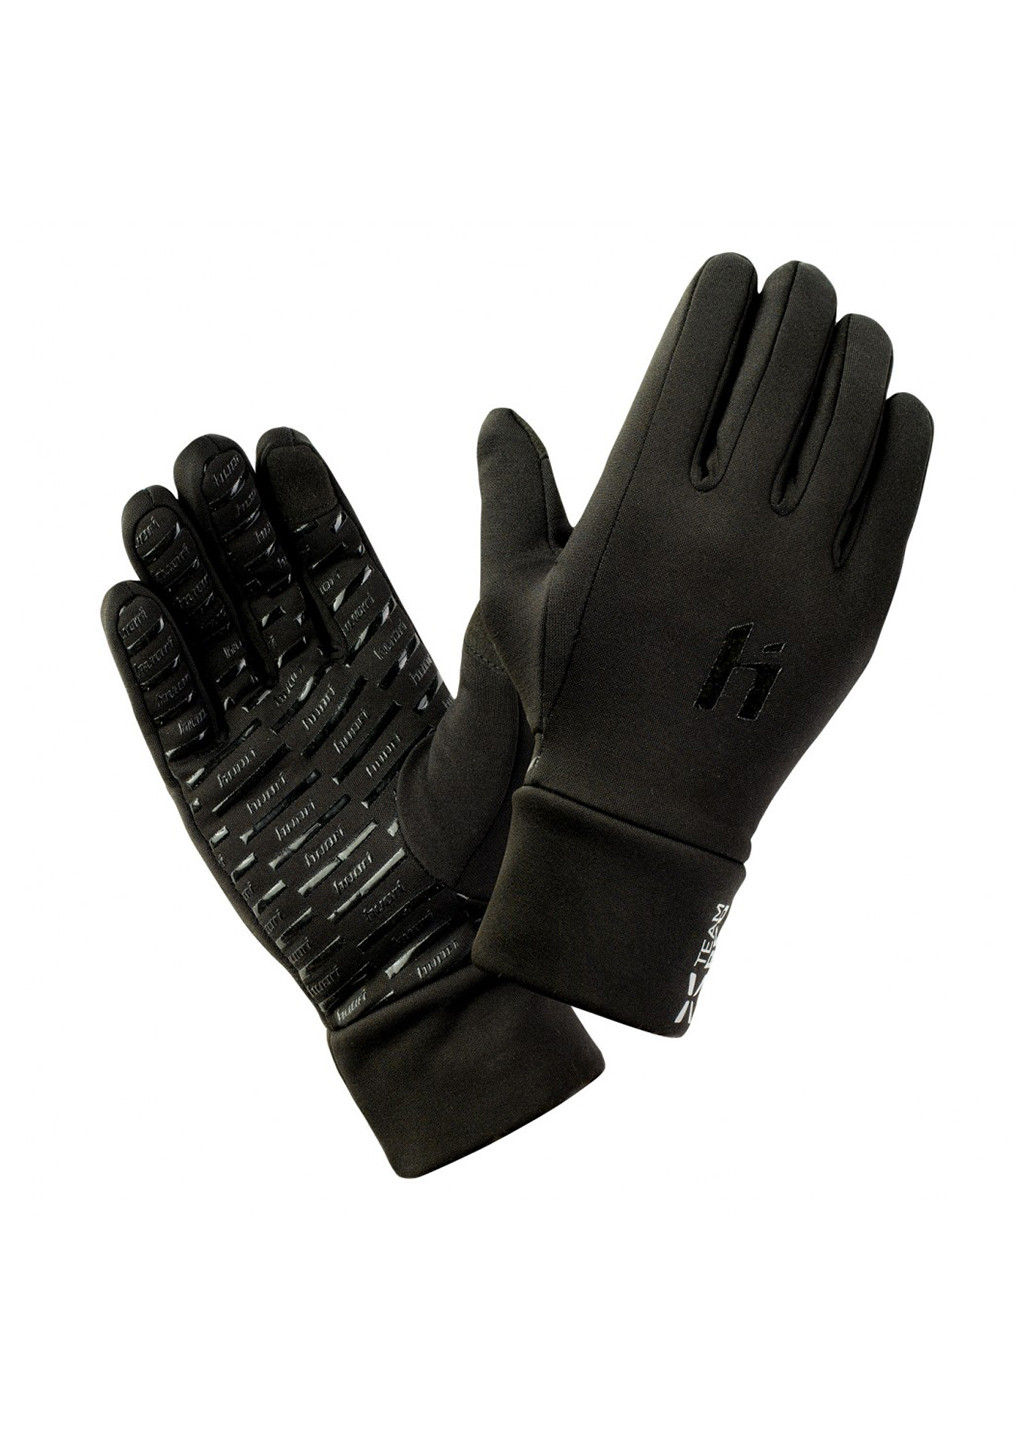 Вратарские перчатки Huari manico gloves-black/silicon (254550790)